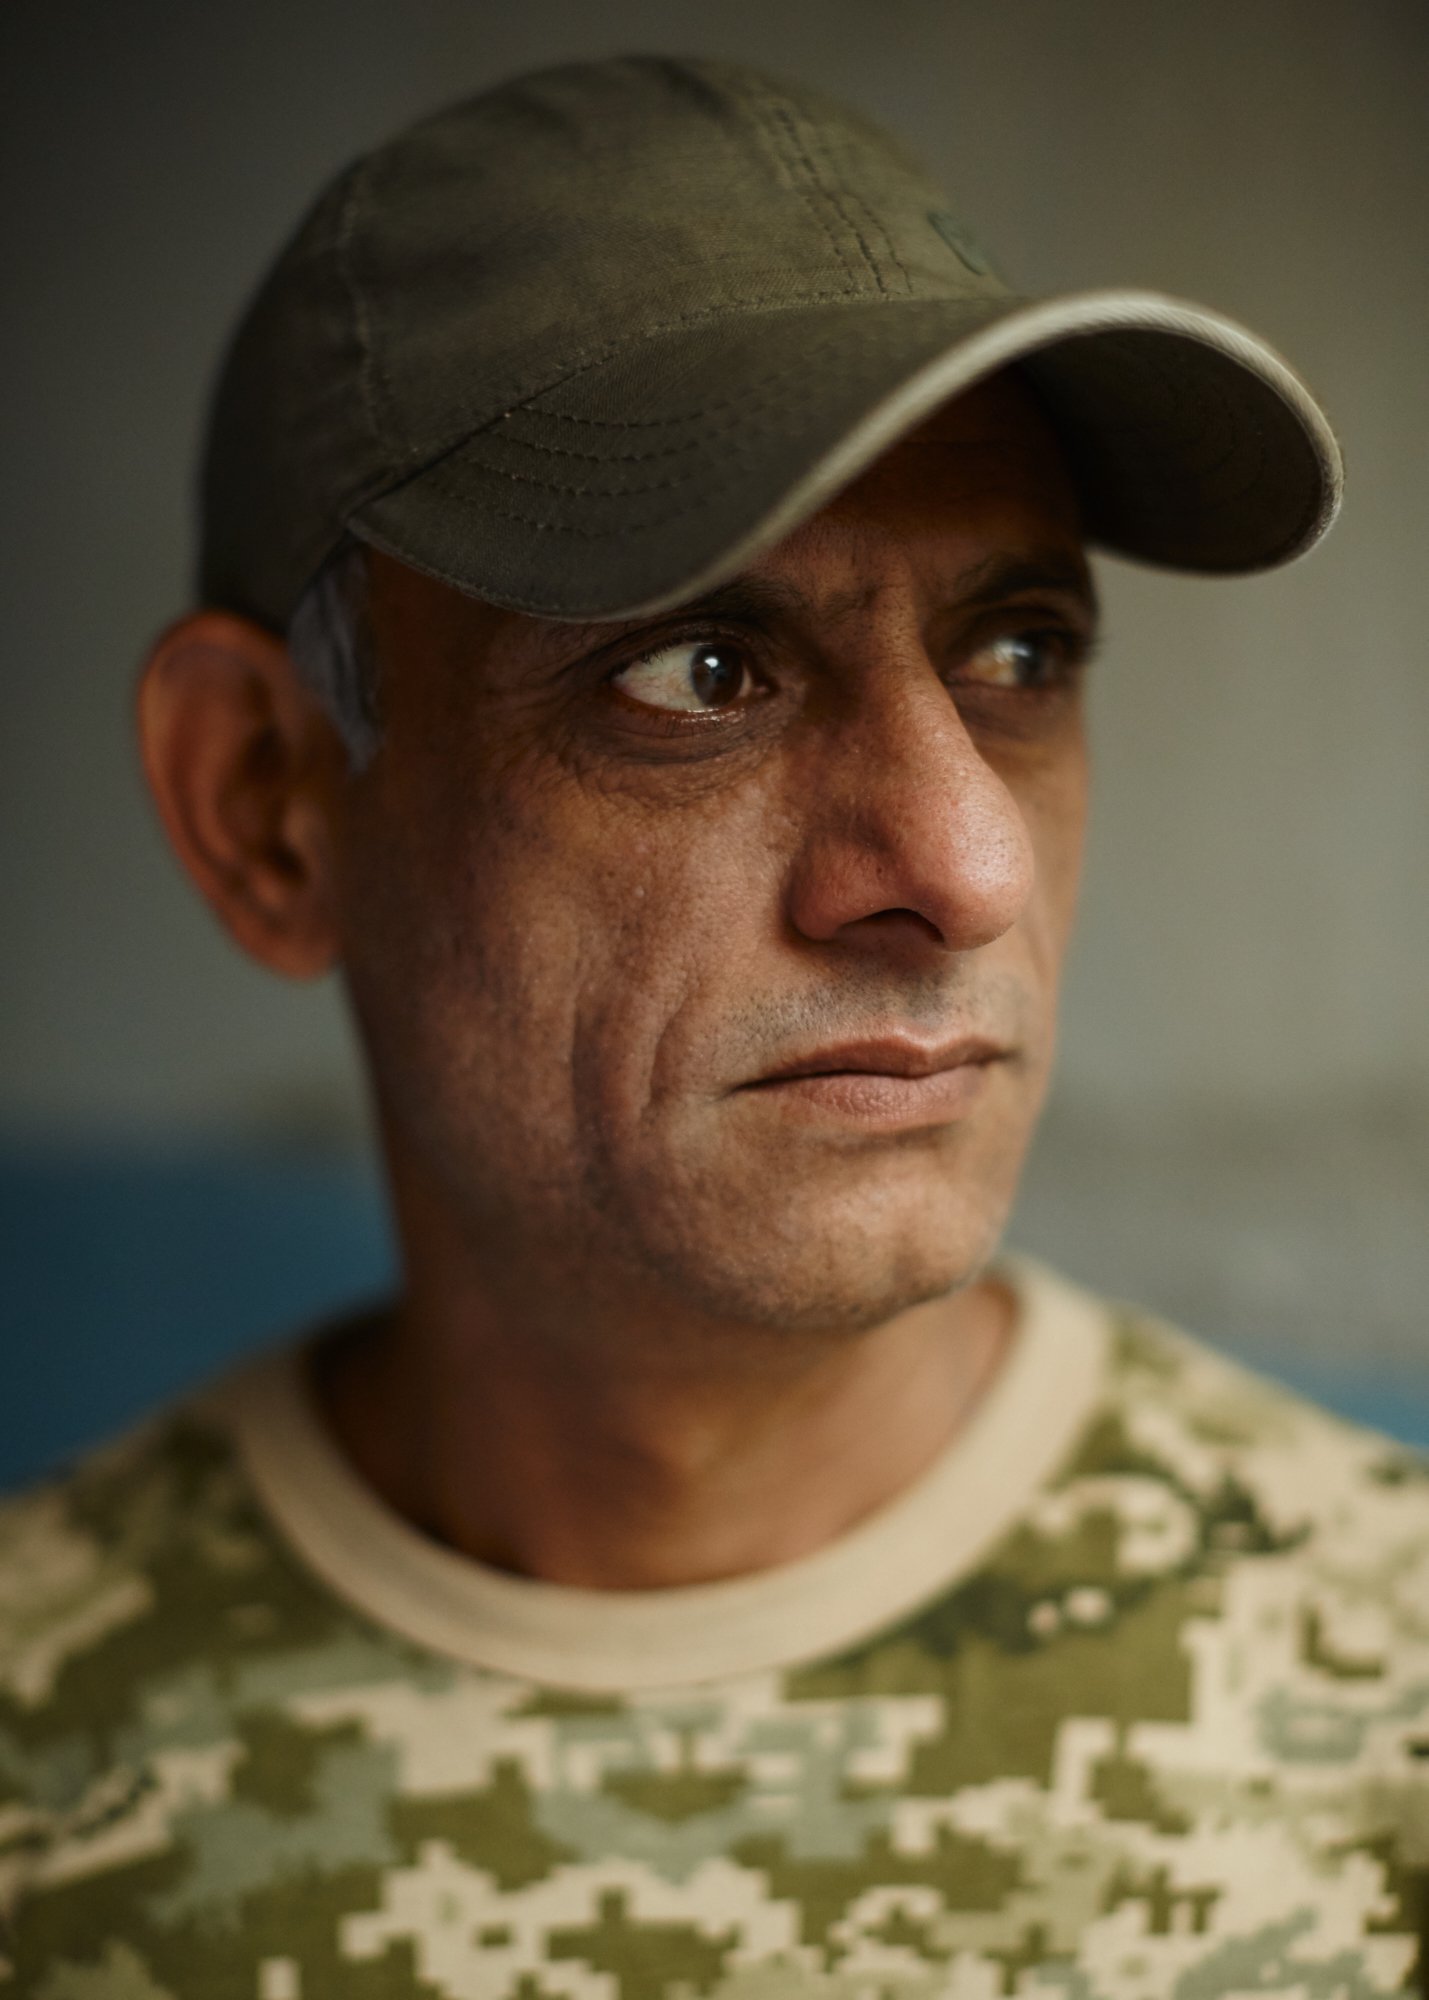 05_Imran Batt, Soldier, Aidman - Separate Medical Company of Northern Territorial Administration, Sloviansk, East Ukraine, June 20th 2015.jpg